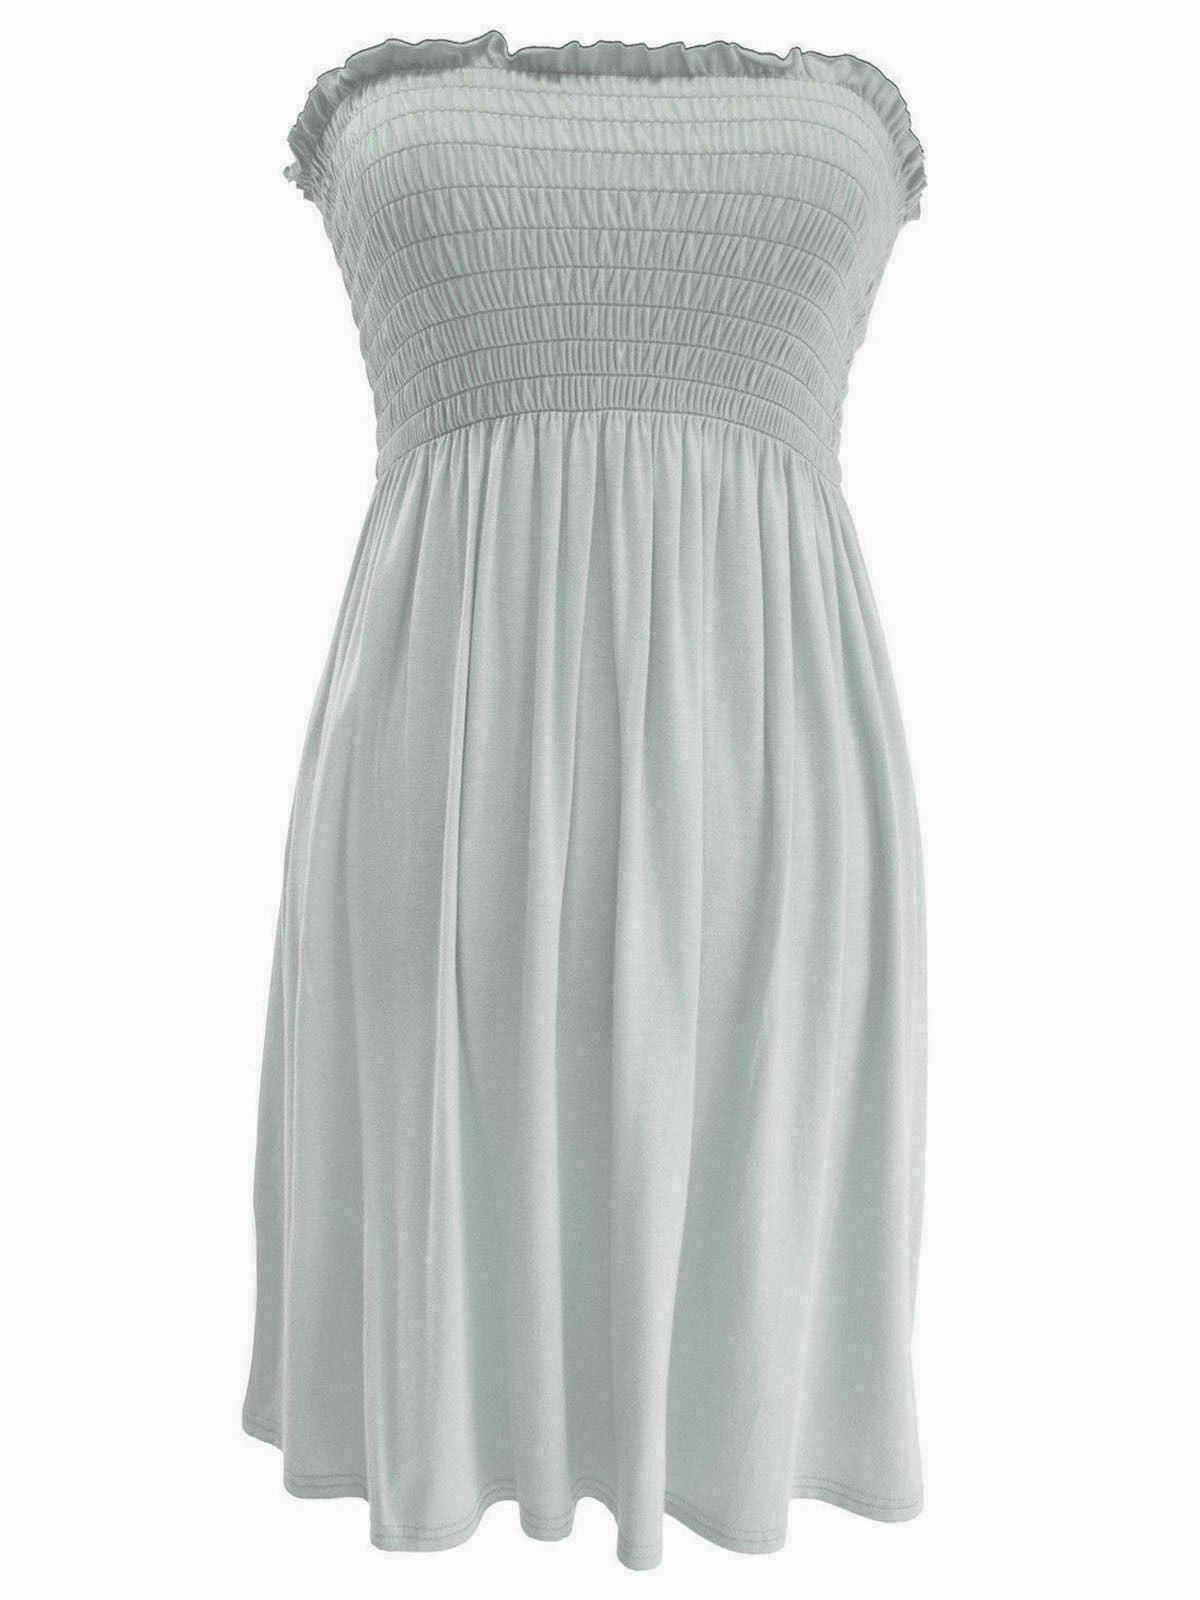 Ladies Plain Silver Grey Boob Tube Short Style Dress.